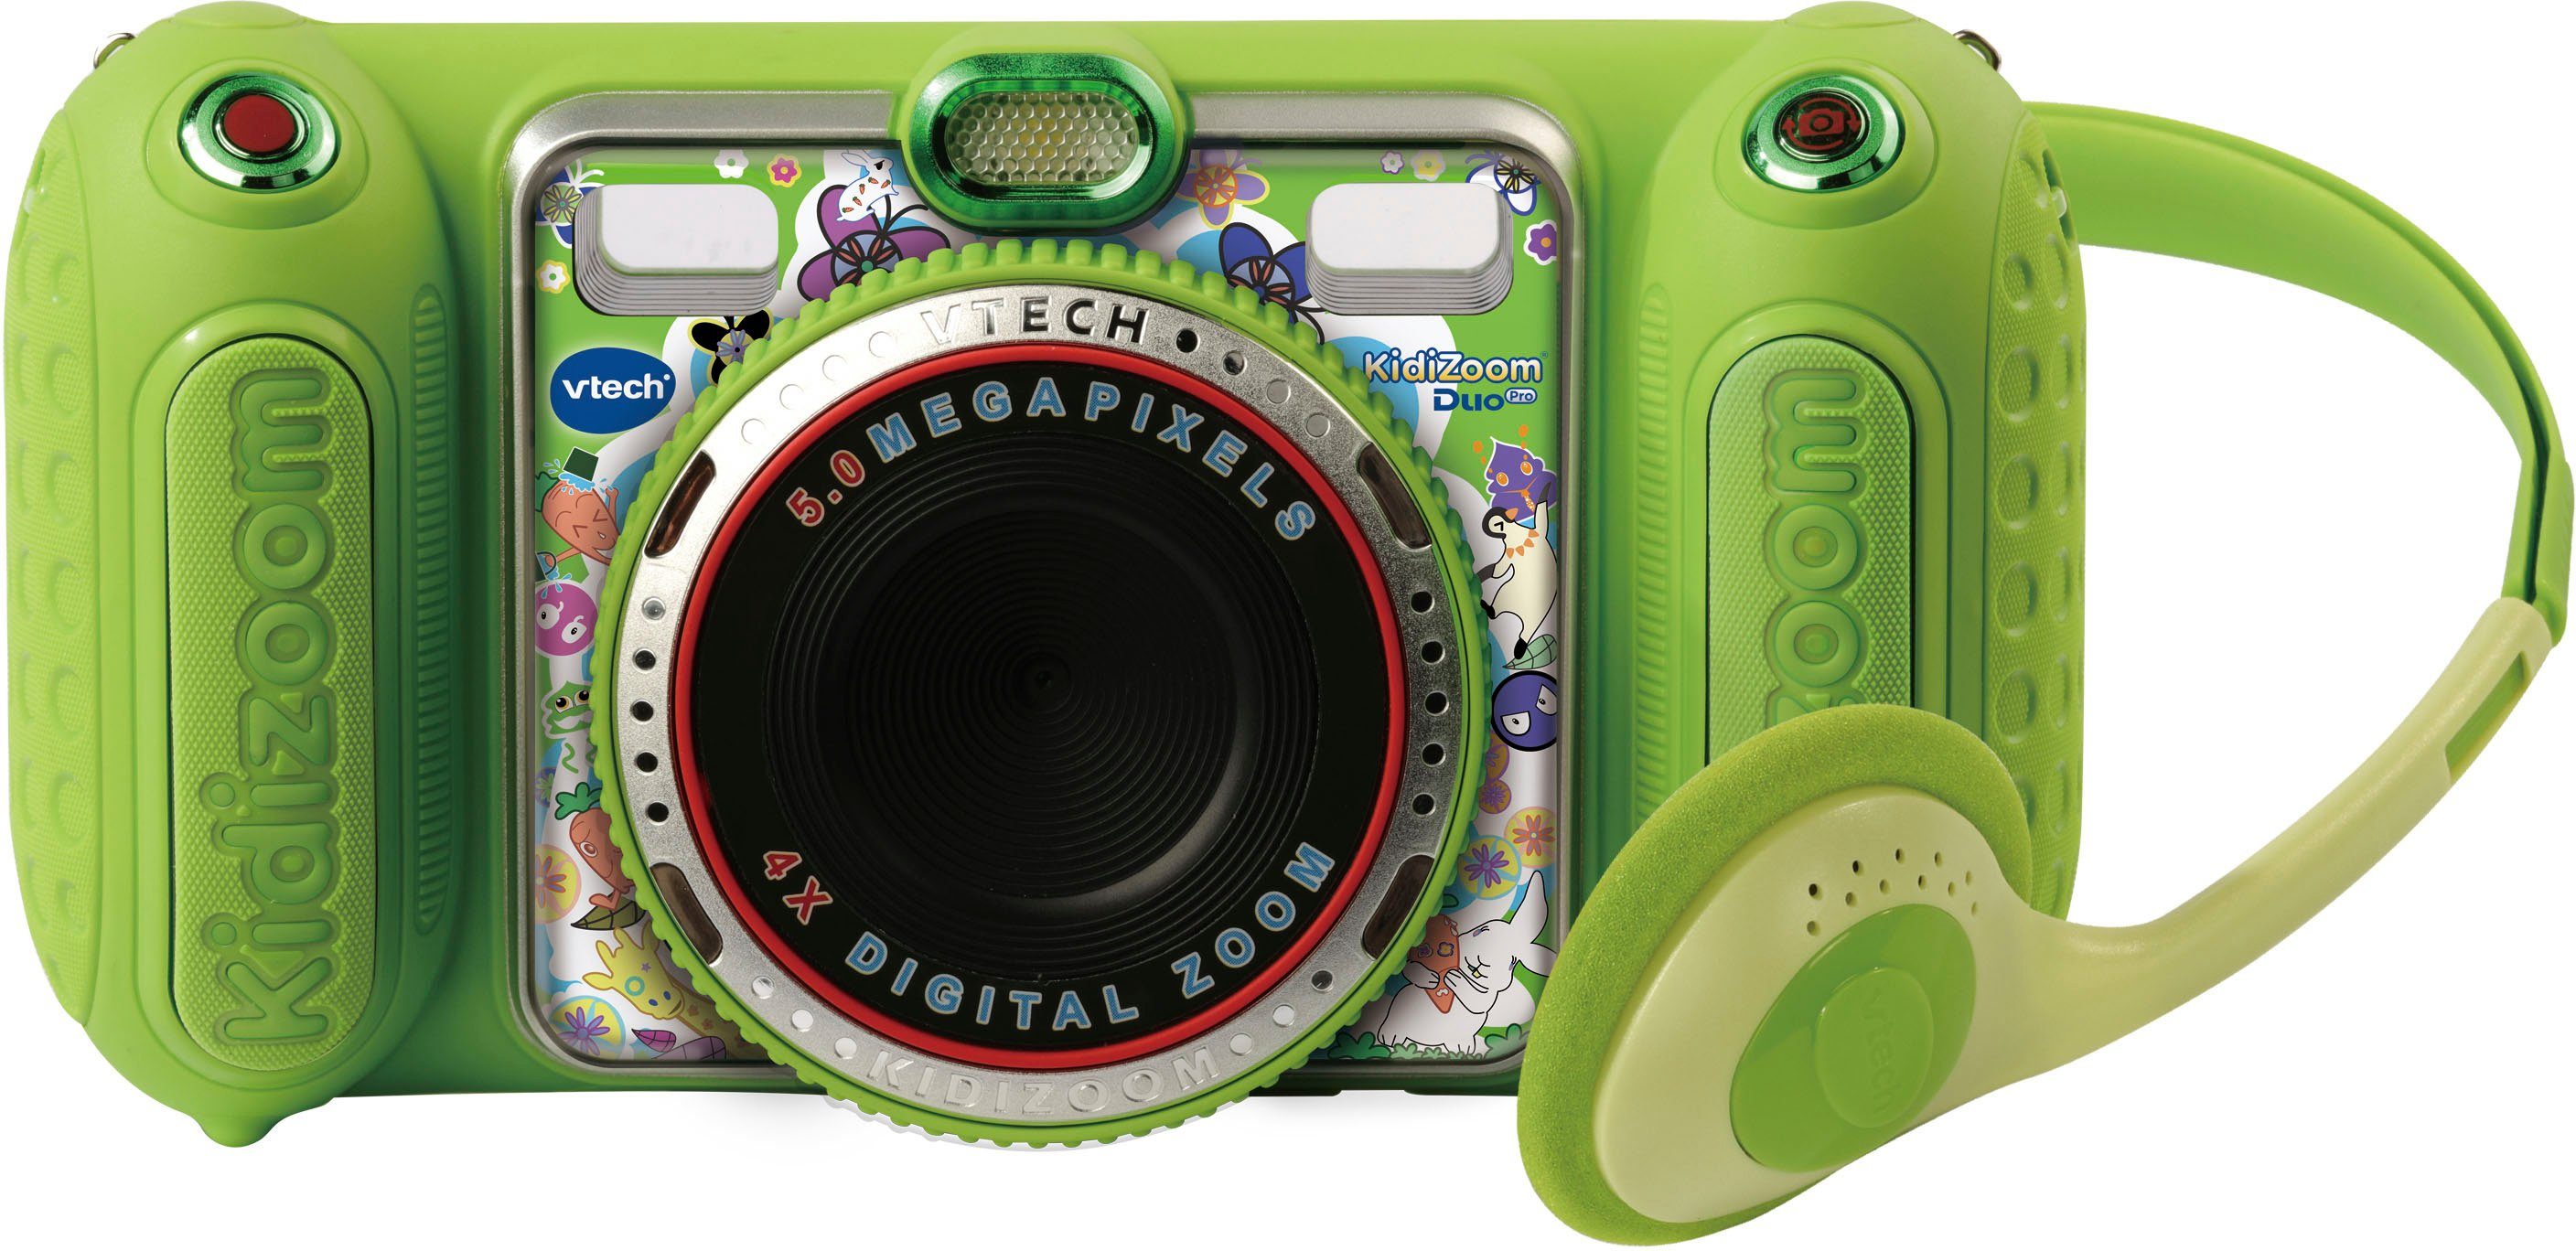 Originalprodukt jetzt verfügbar (inkluisve Pro Kinderkamera KidiZoom grün Vtech® Kopfhörer) Duo